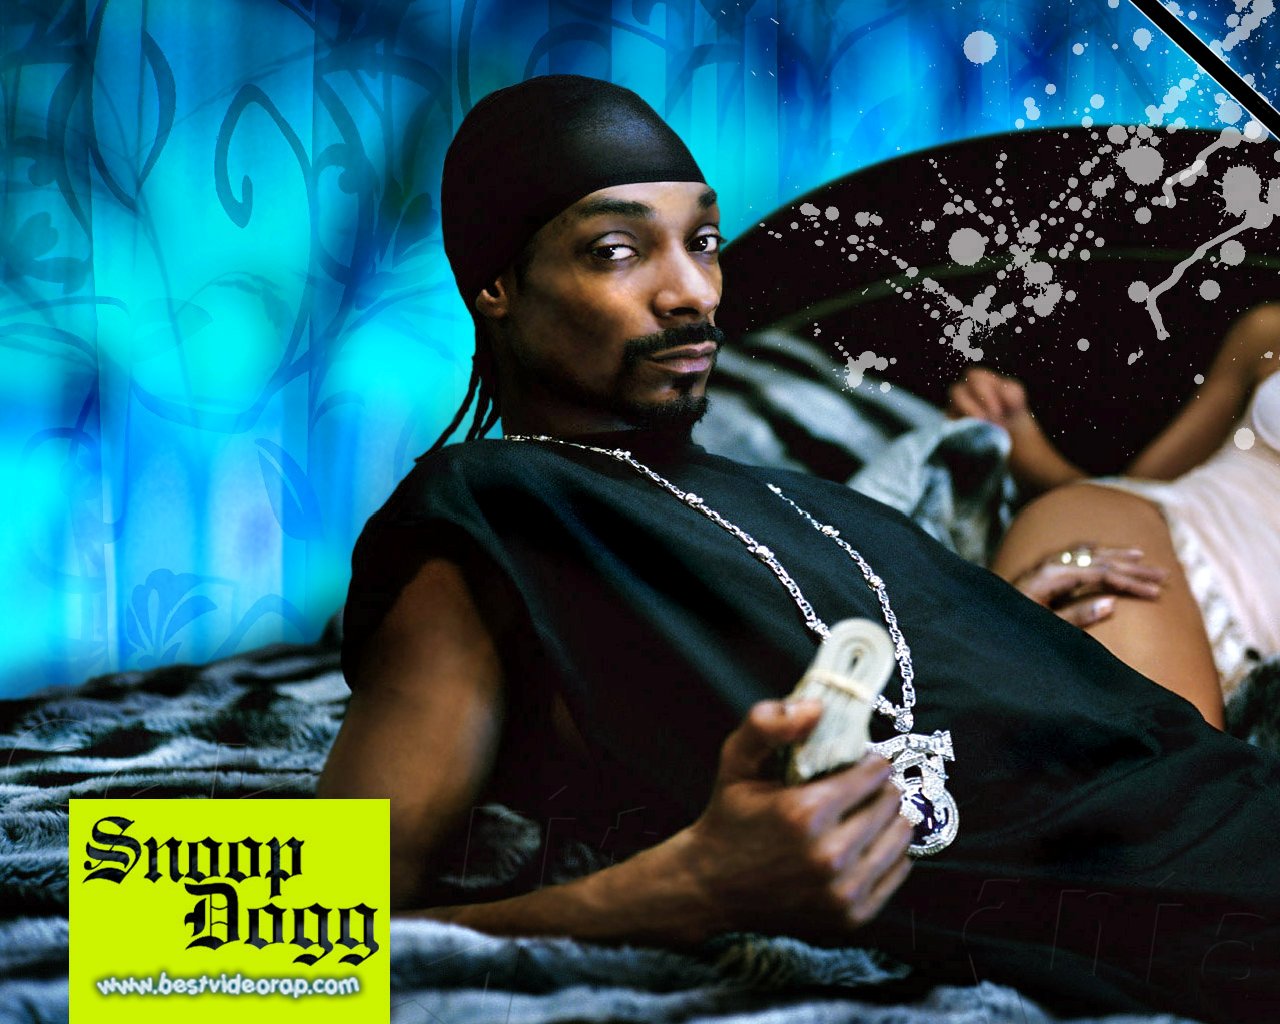 fondo de pantalla de snoop dogg,rapero,música,frio,música hip hop,portada del álbum